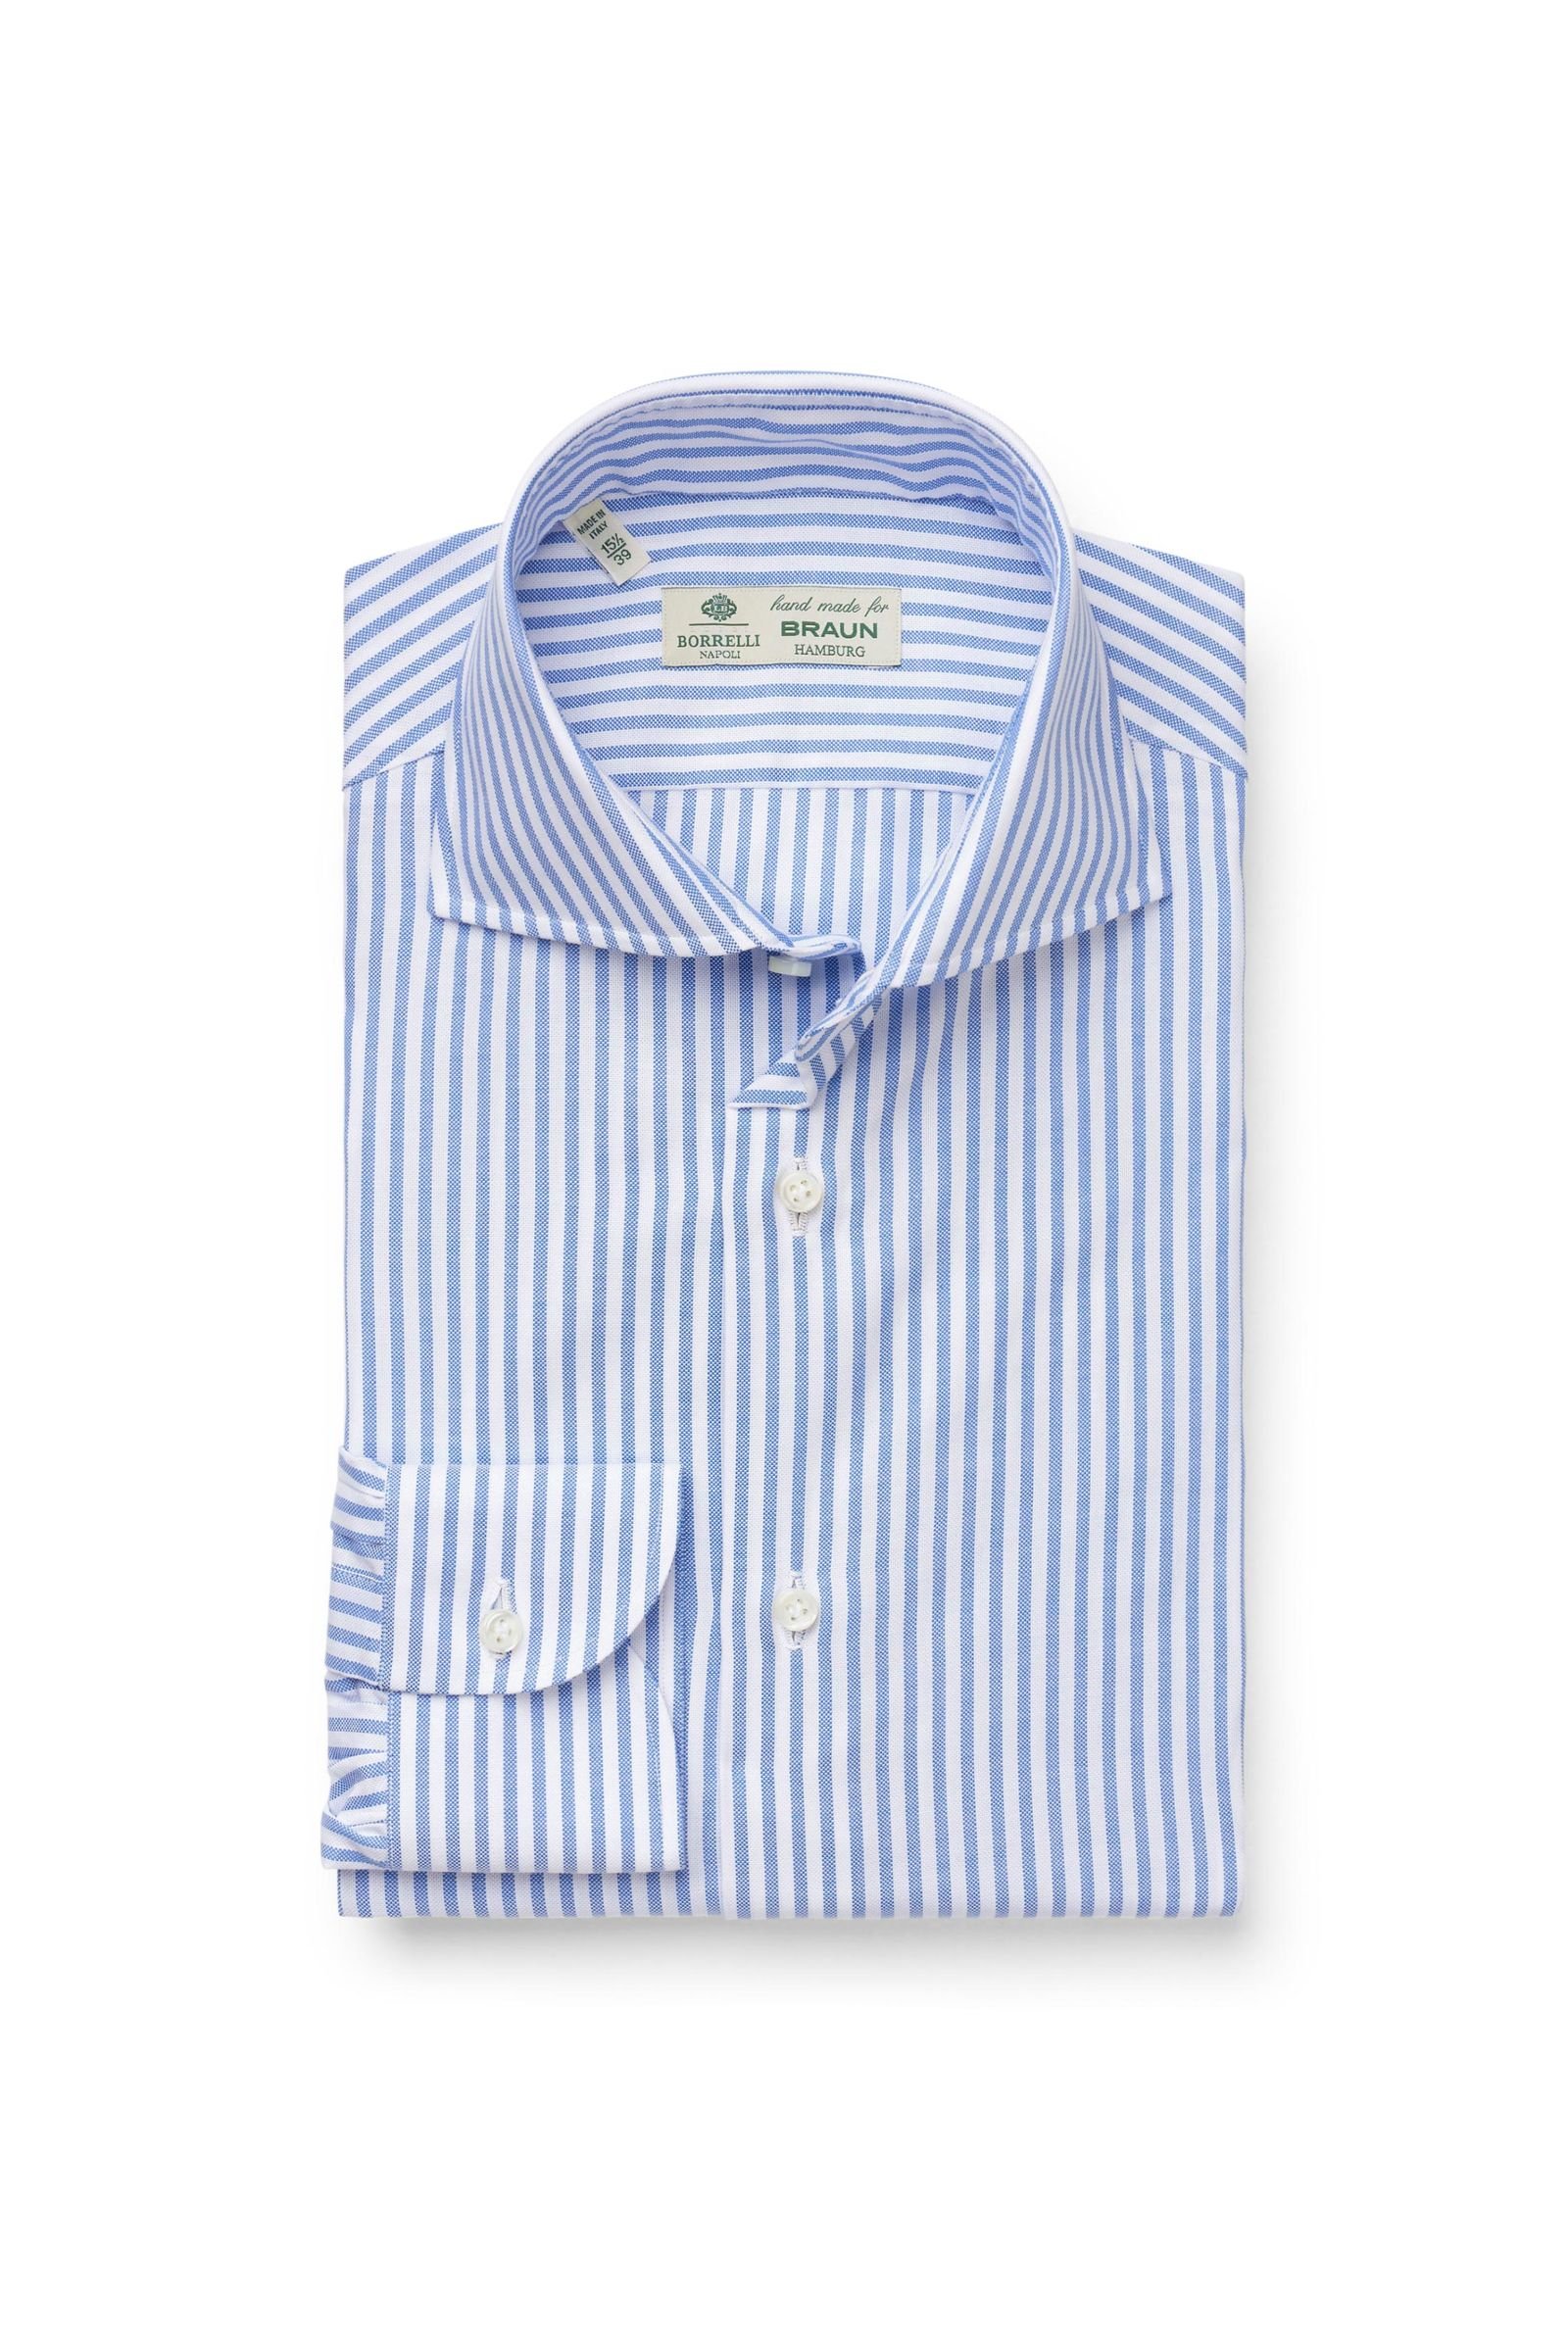 Oxford shirt 'Nando' shark collar blue/white striped